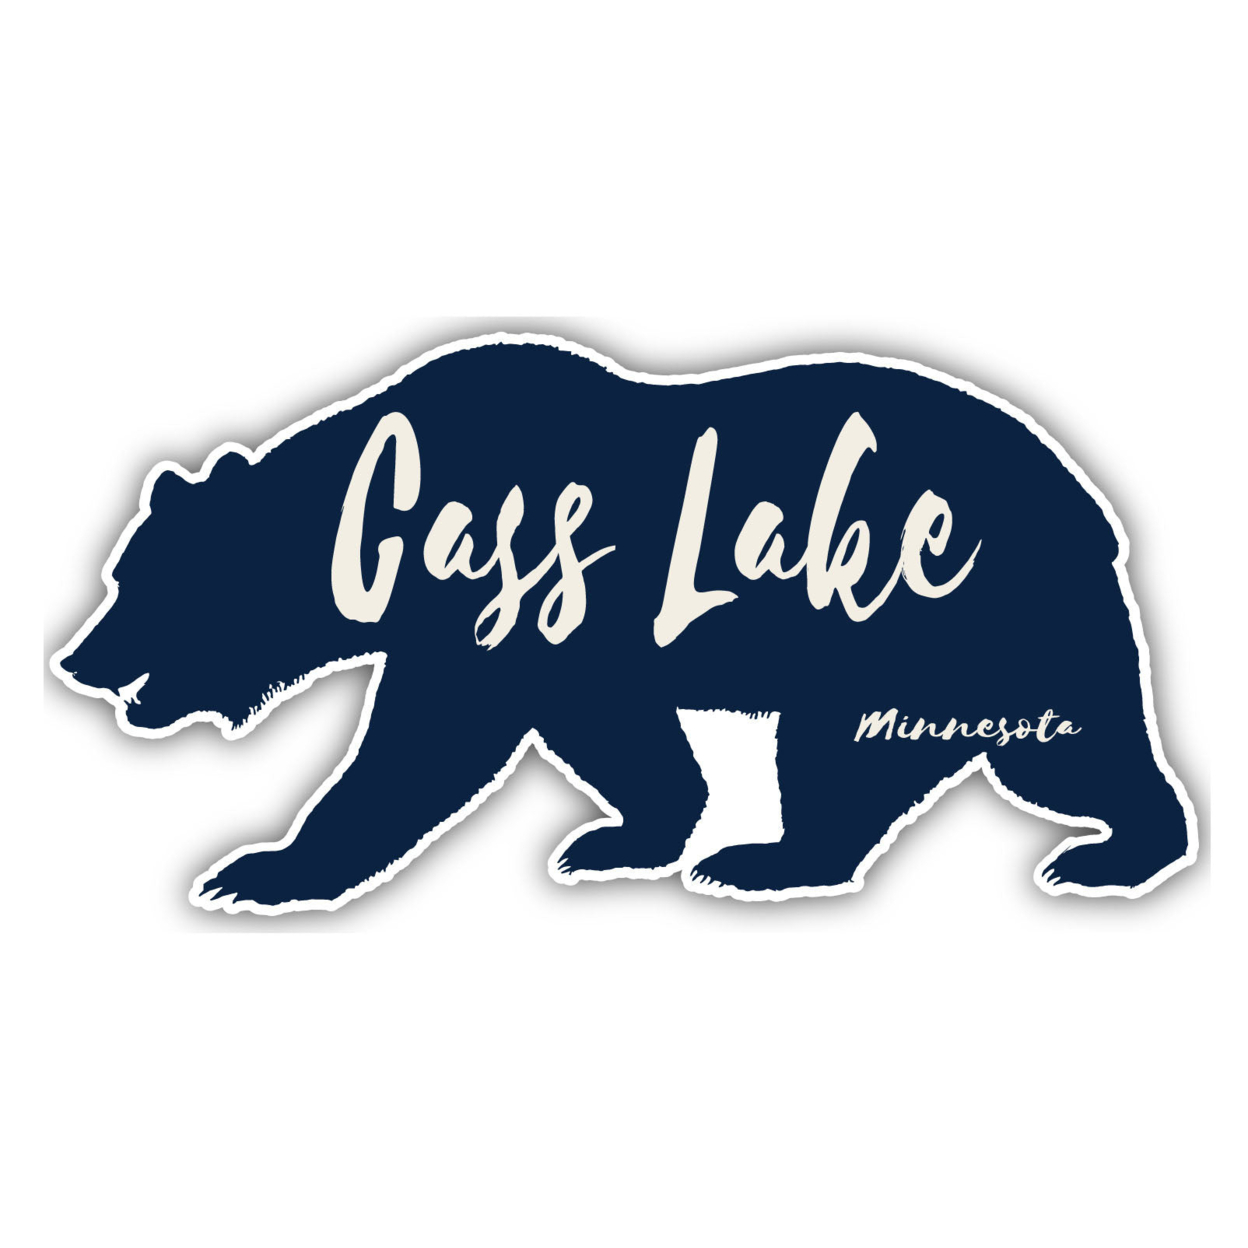 Cass Lake Minnesota Souvenir Decorative Stickers (Choose Theme And Size) - Single Unit, 2-Inch, Tent